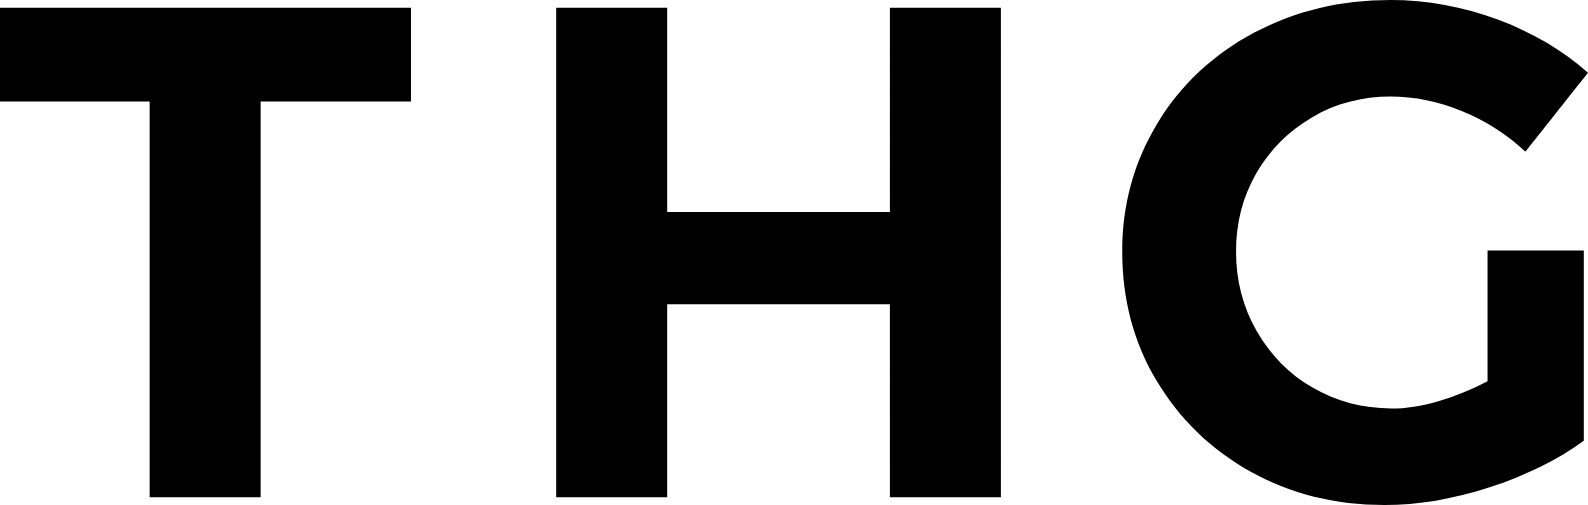 THG (The Hut Group) logo (transparent PNG)